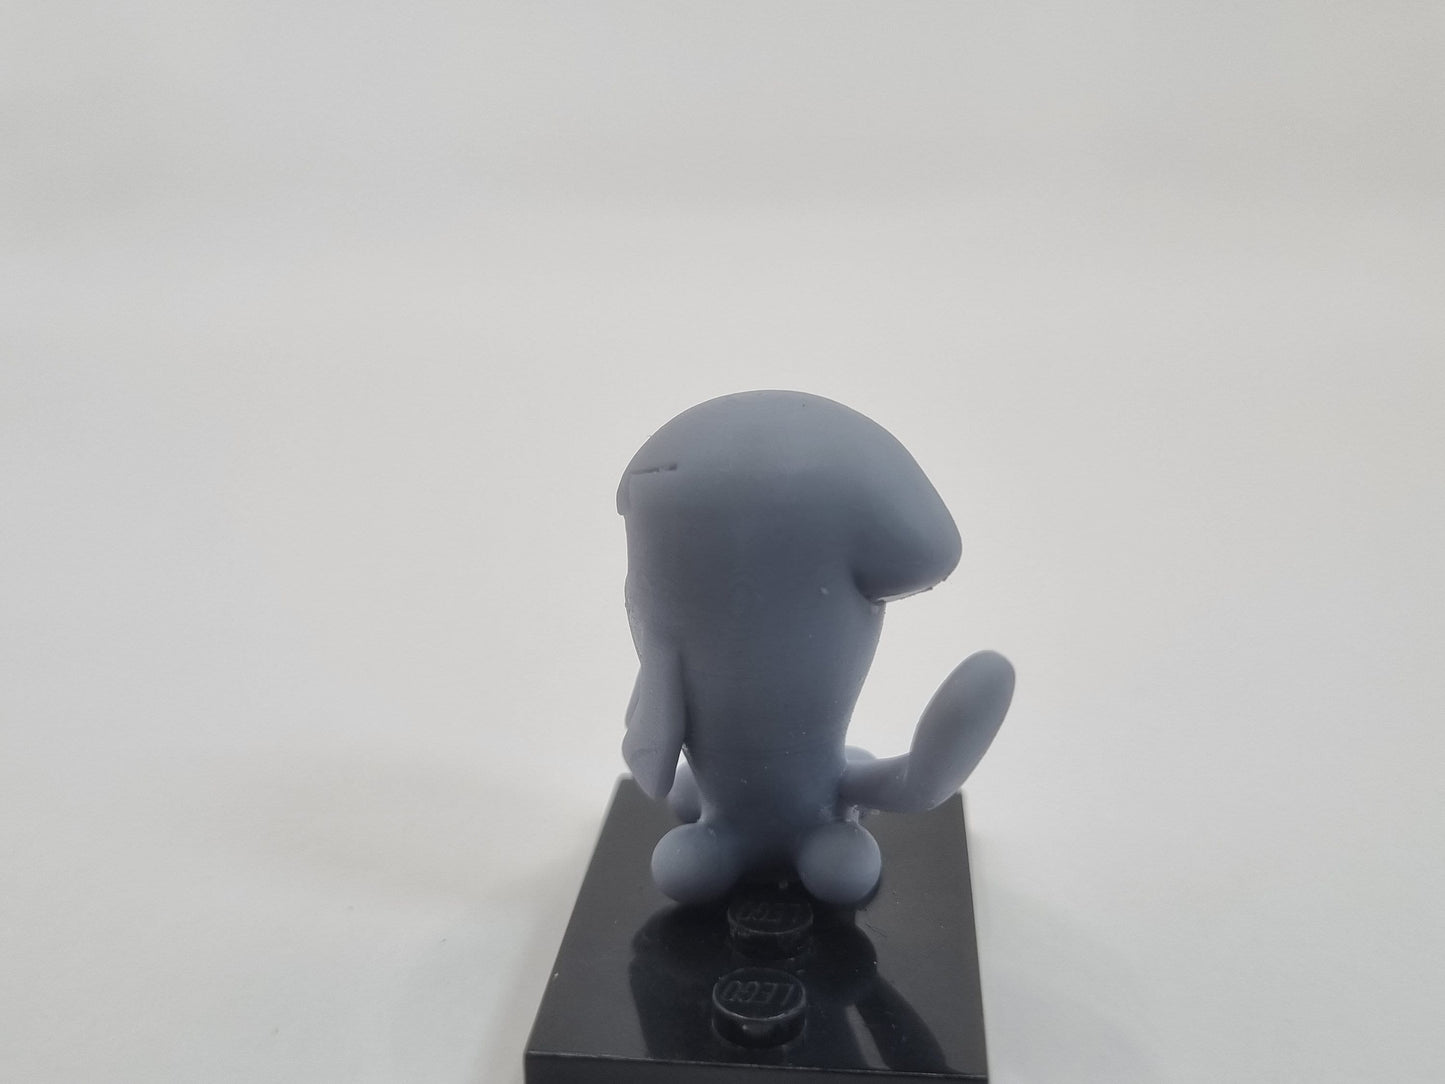 Building toy custom 3D printed happy balloon creature